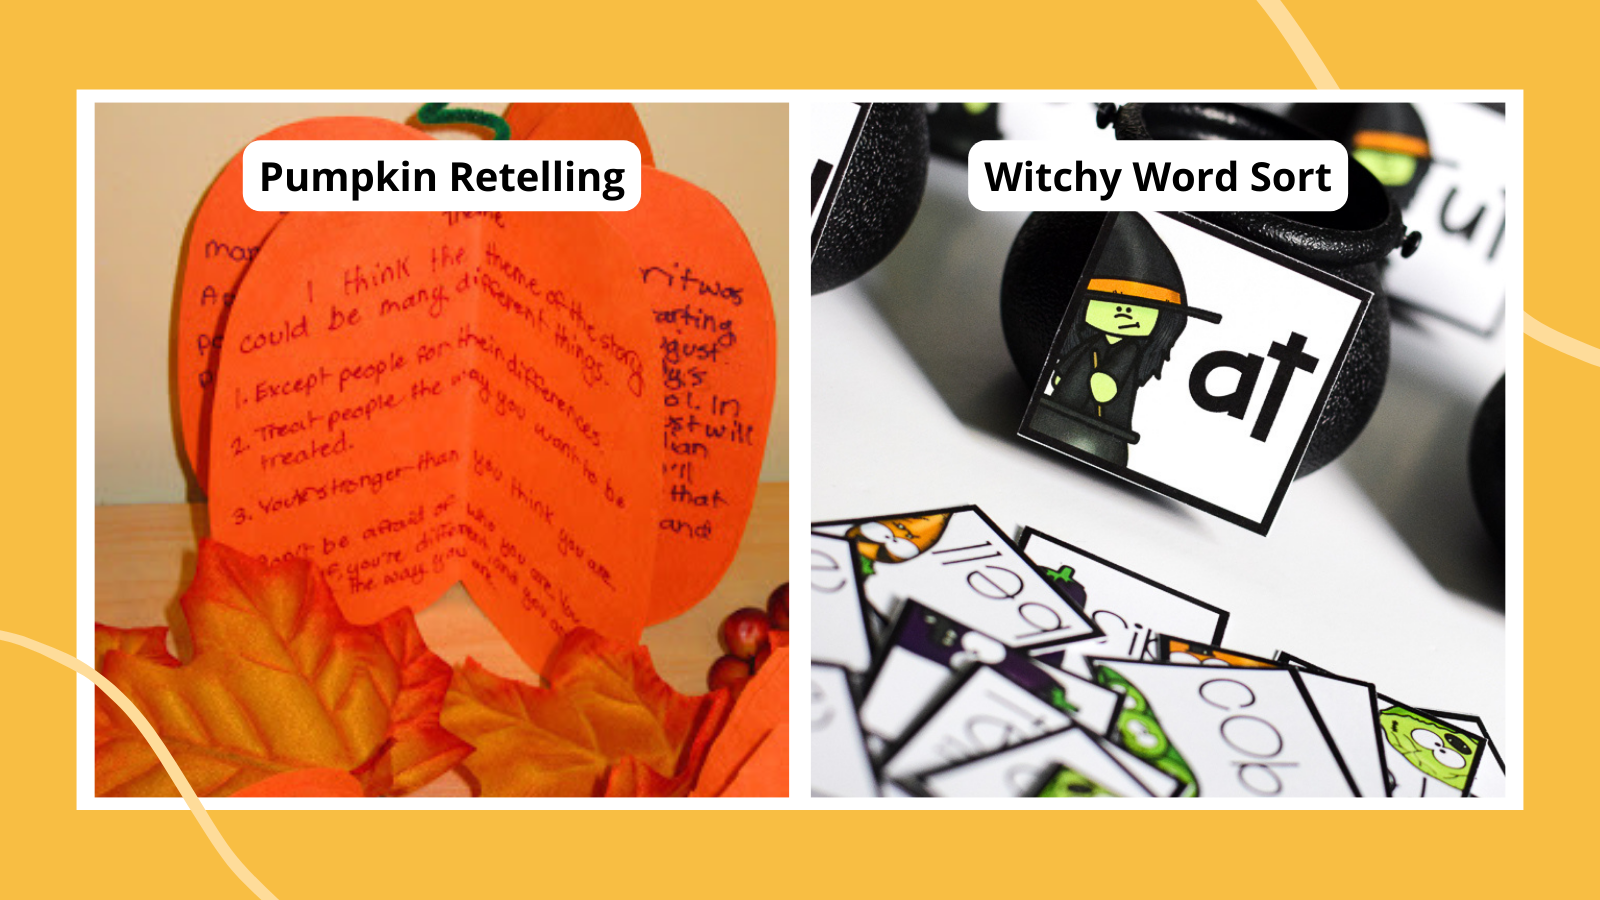 Halloween Games., Teacher Idea  Writing prompts, Daily writing, Daily  writing prompts